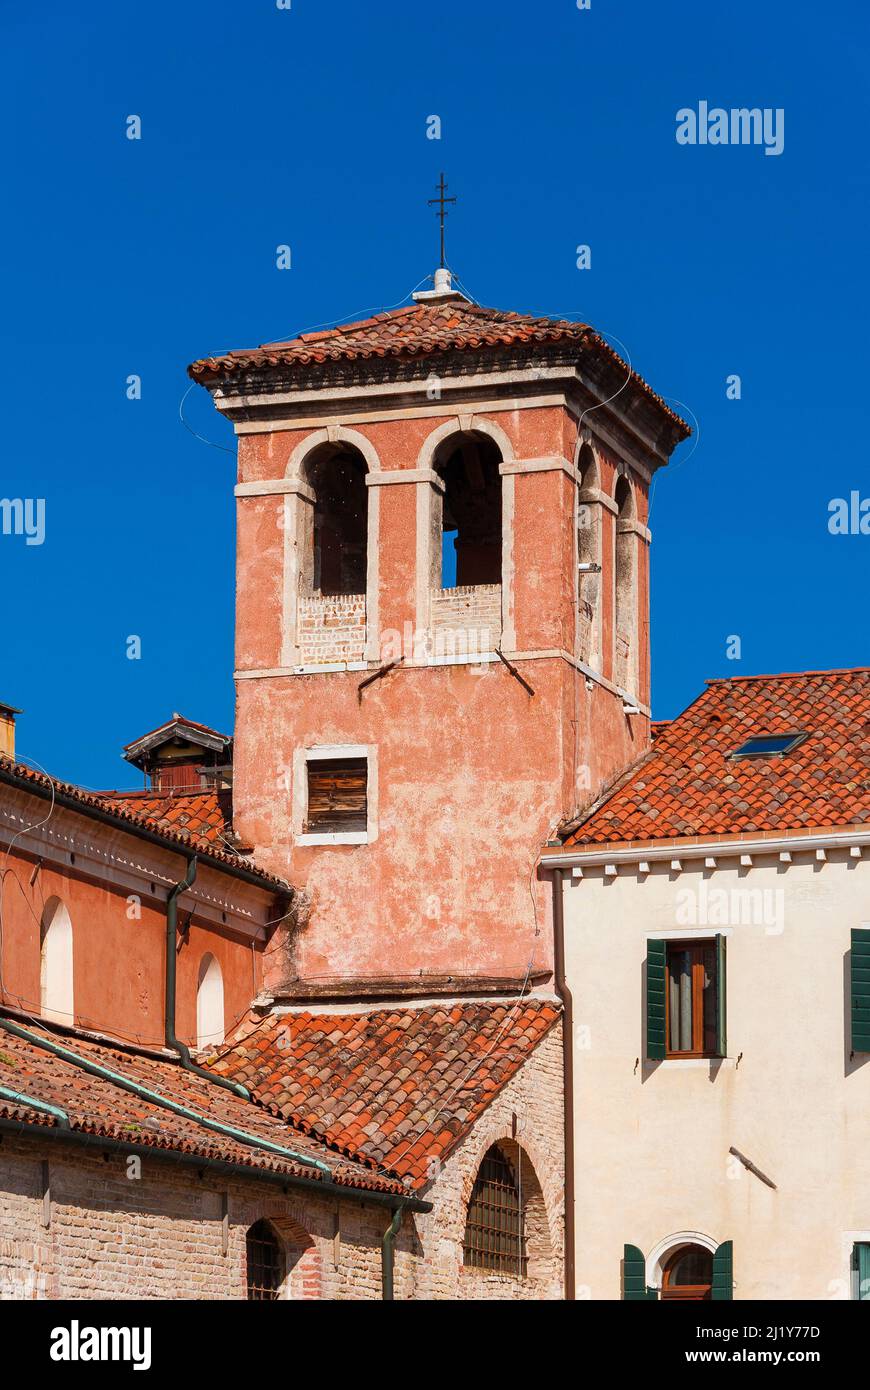 Religiöse Architektur in Venedig. Glockenturm aus dem 18.. Jahrhundert der Kirche San Zan Degolà (St. John Enthauptet) Stockfoto